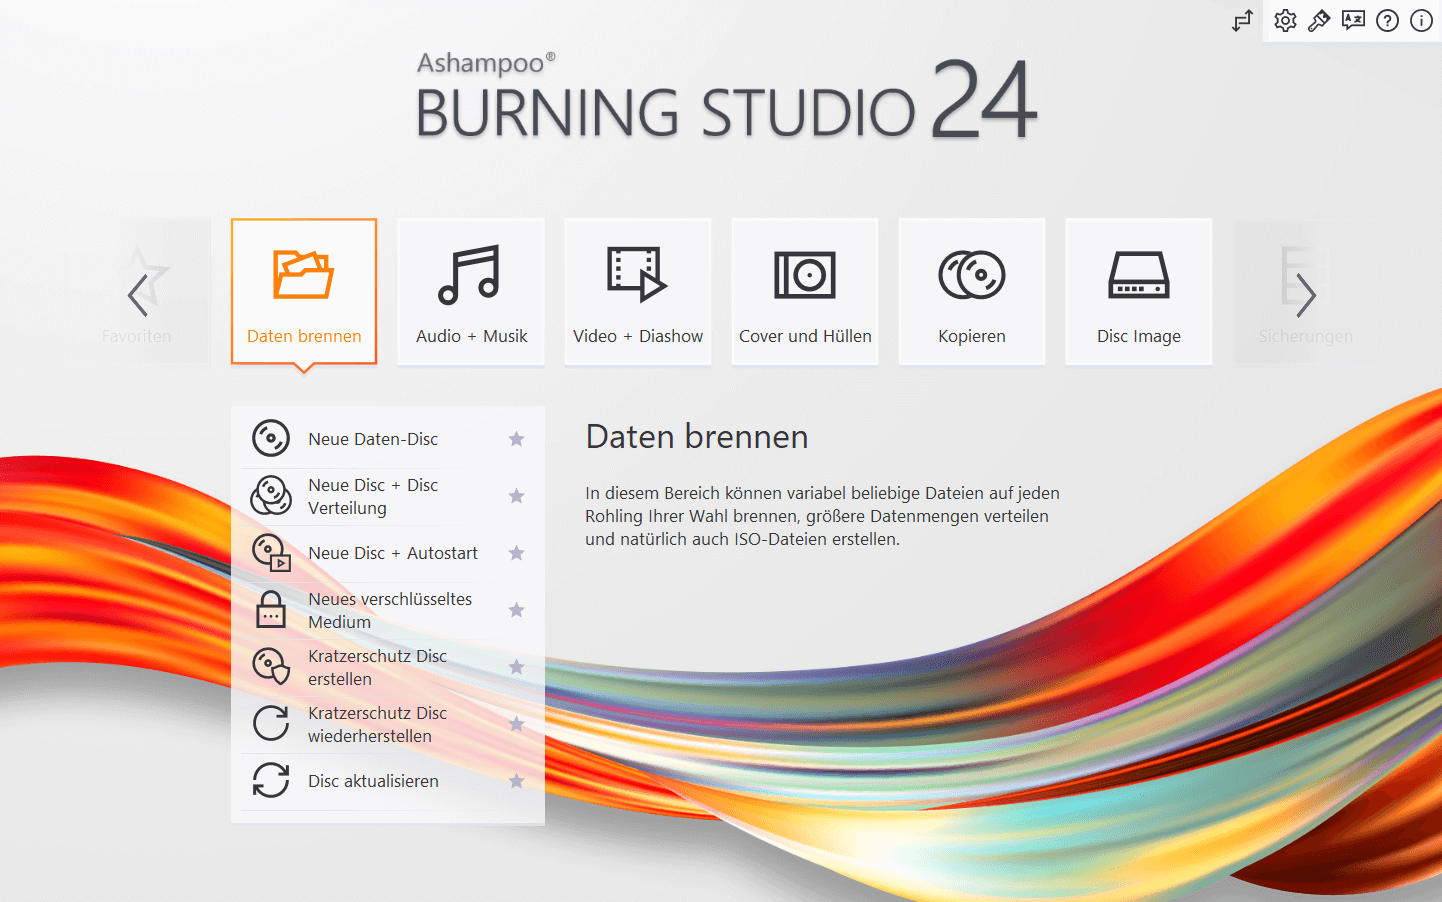 Ashampoo® Burning Studio 24 - Menü 2 hell